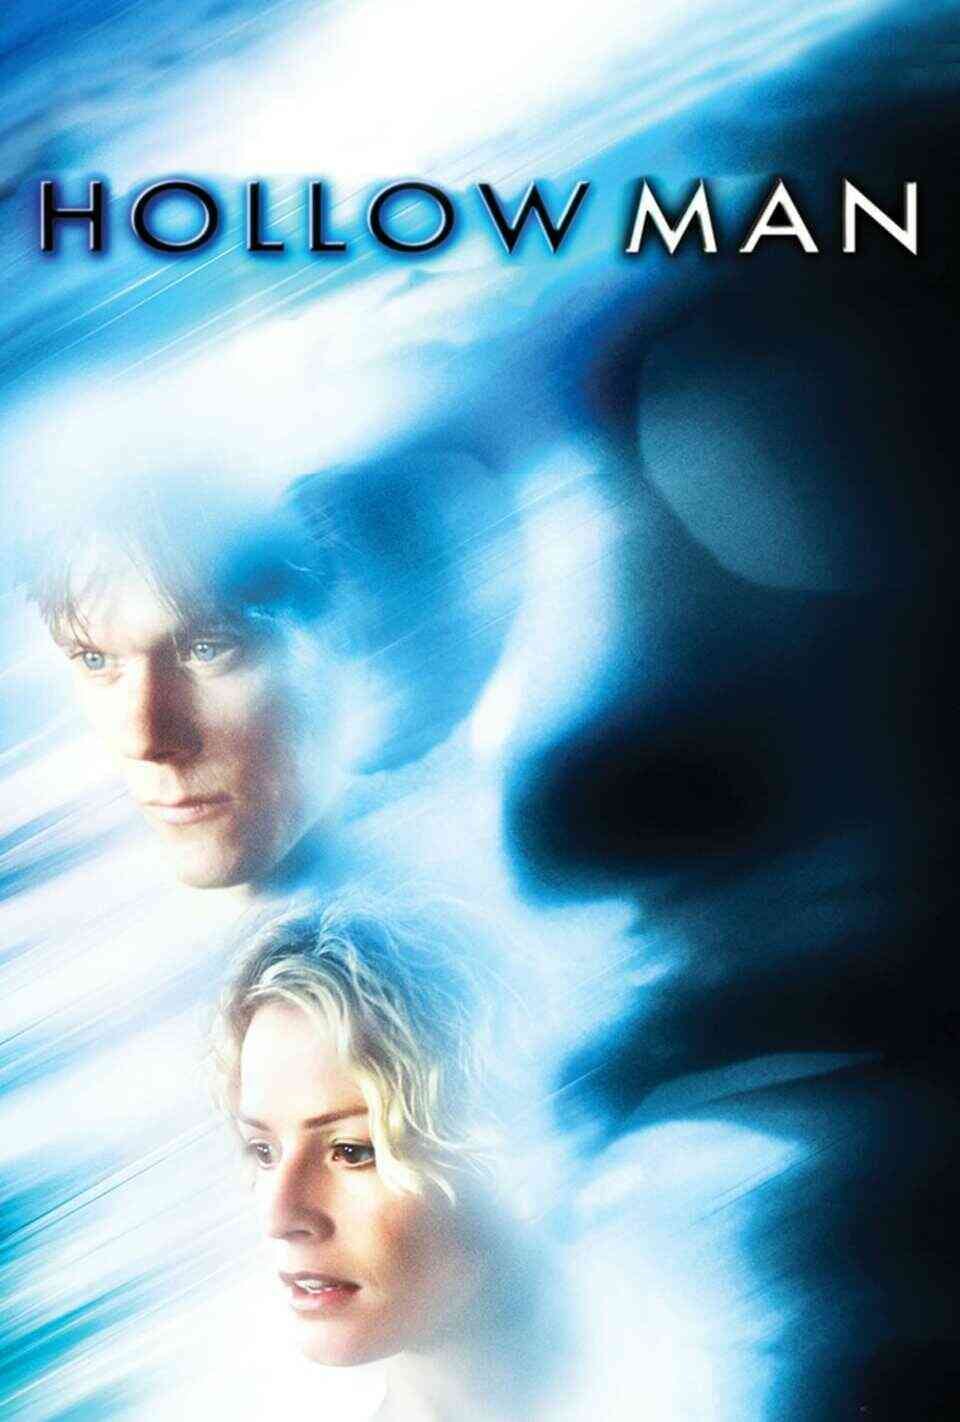 Read Hollow Man screenplay (poster)